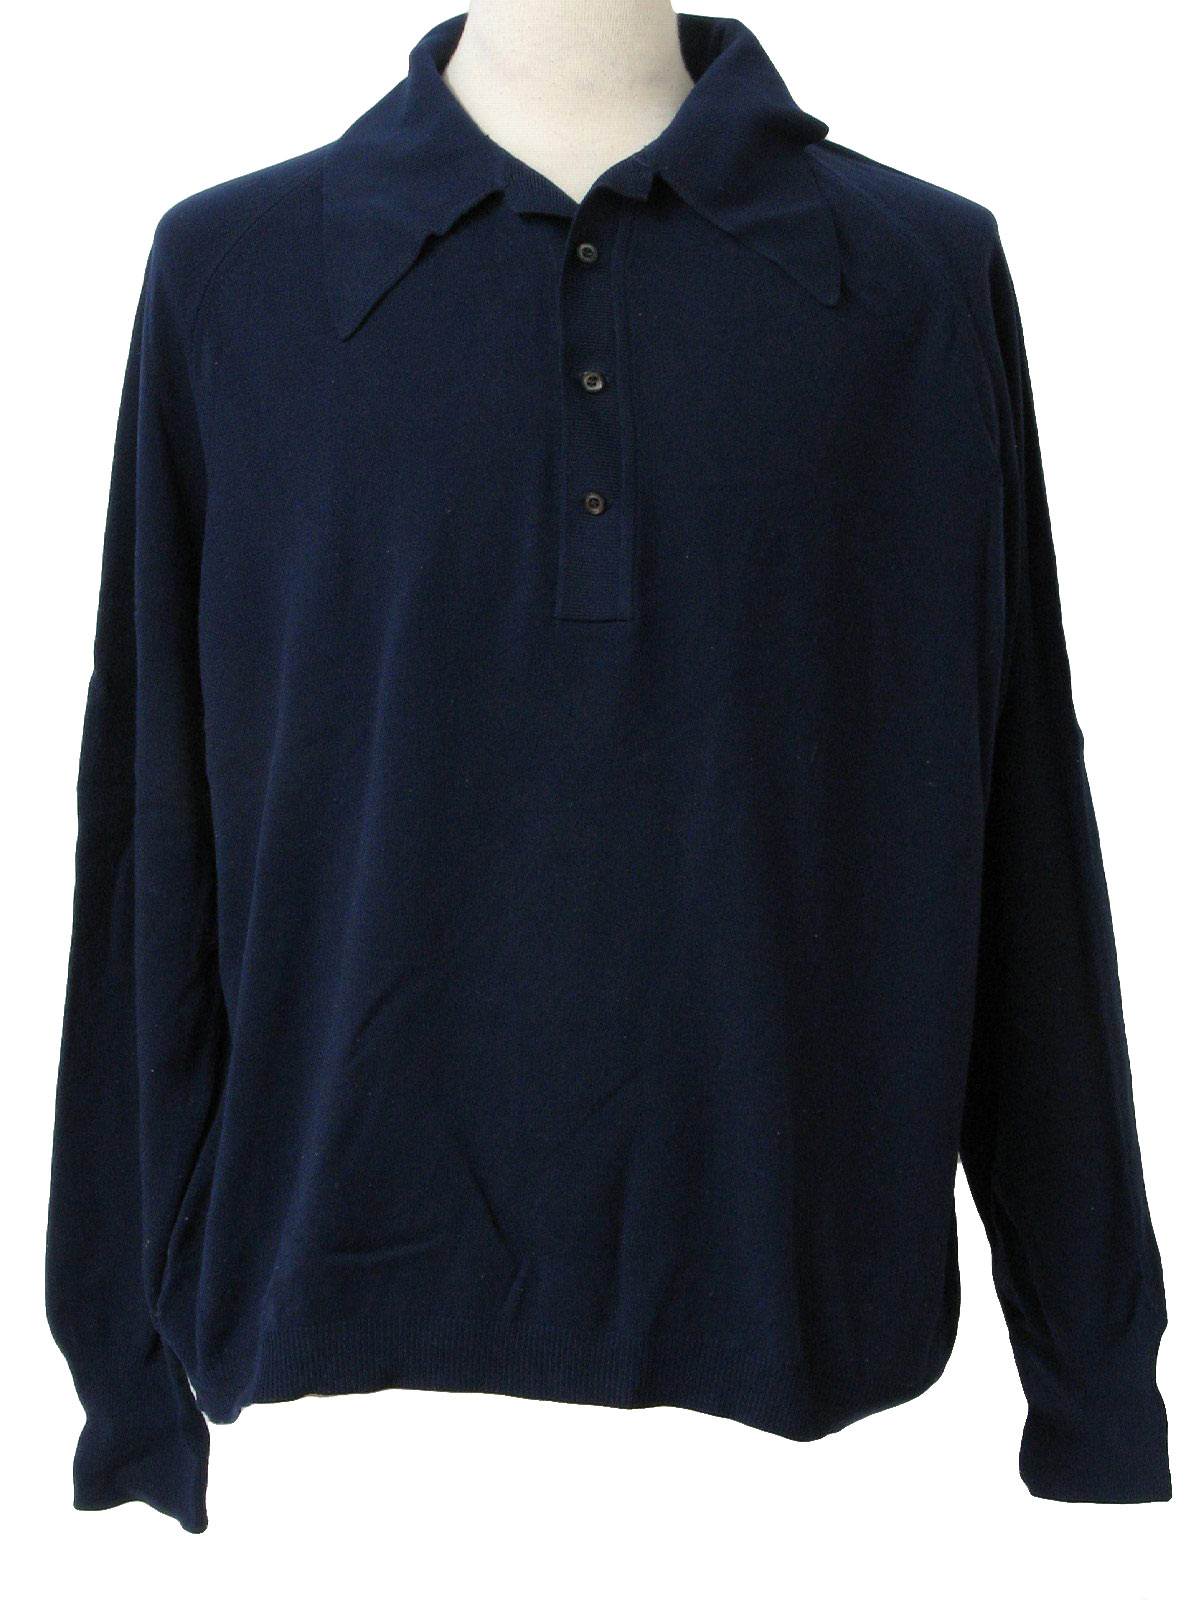 Retro 70s Knit Shirt (Puritan) : 70s -Puritan- Mens dark navy blue ...